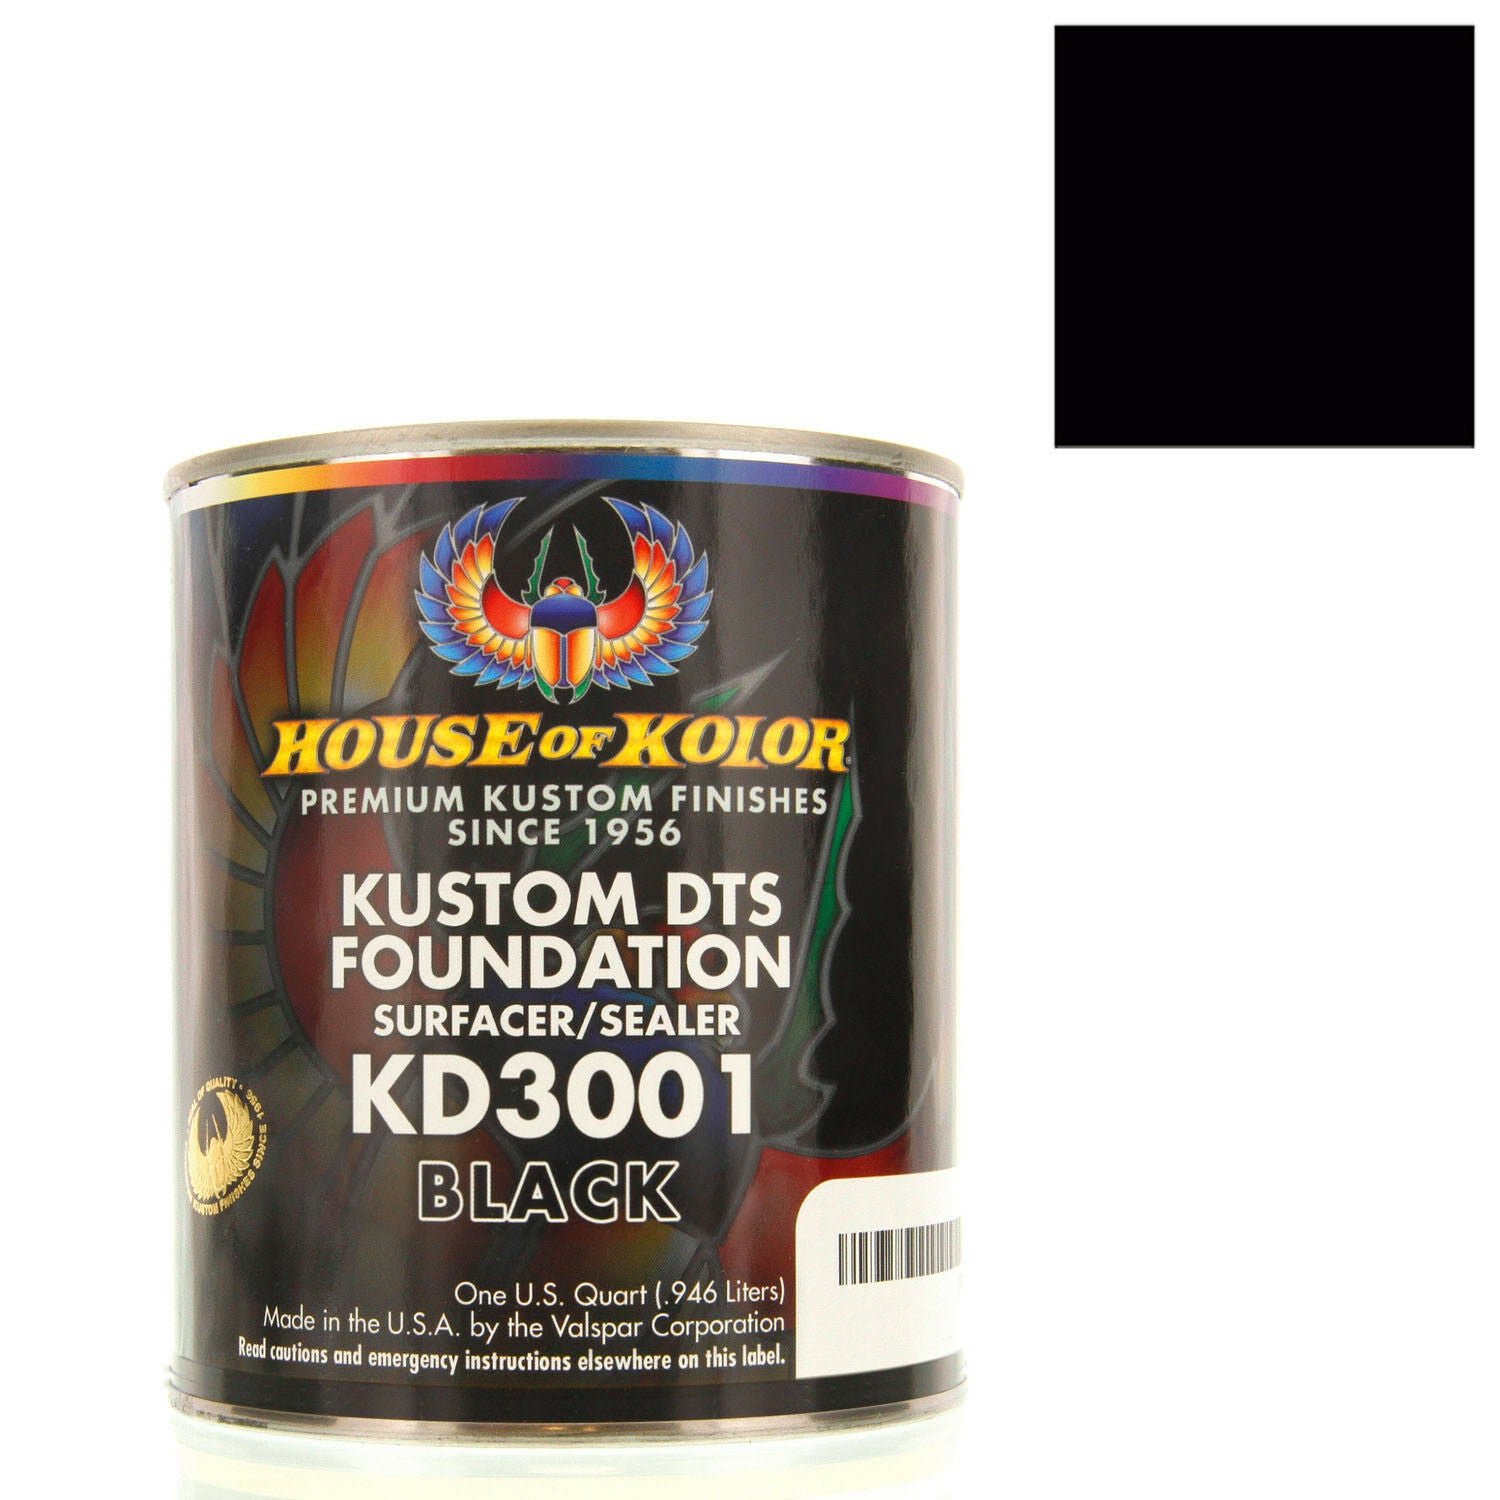 Black - Custom Dts Foundation Surfacer Sealer Epoxy Primer, 1 Gallon House of Kolor